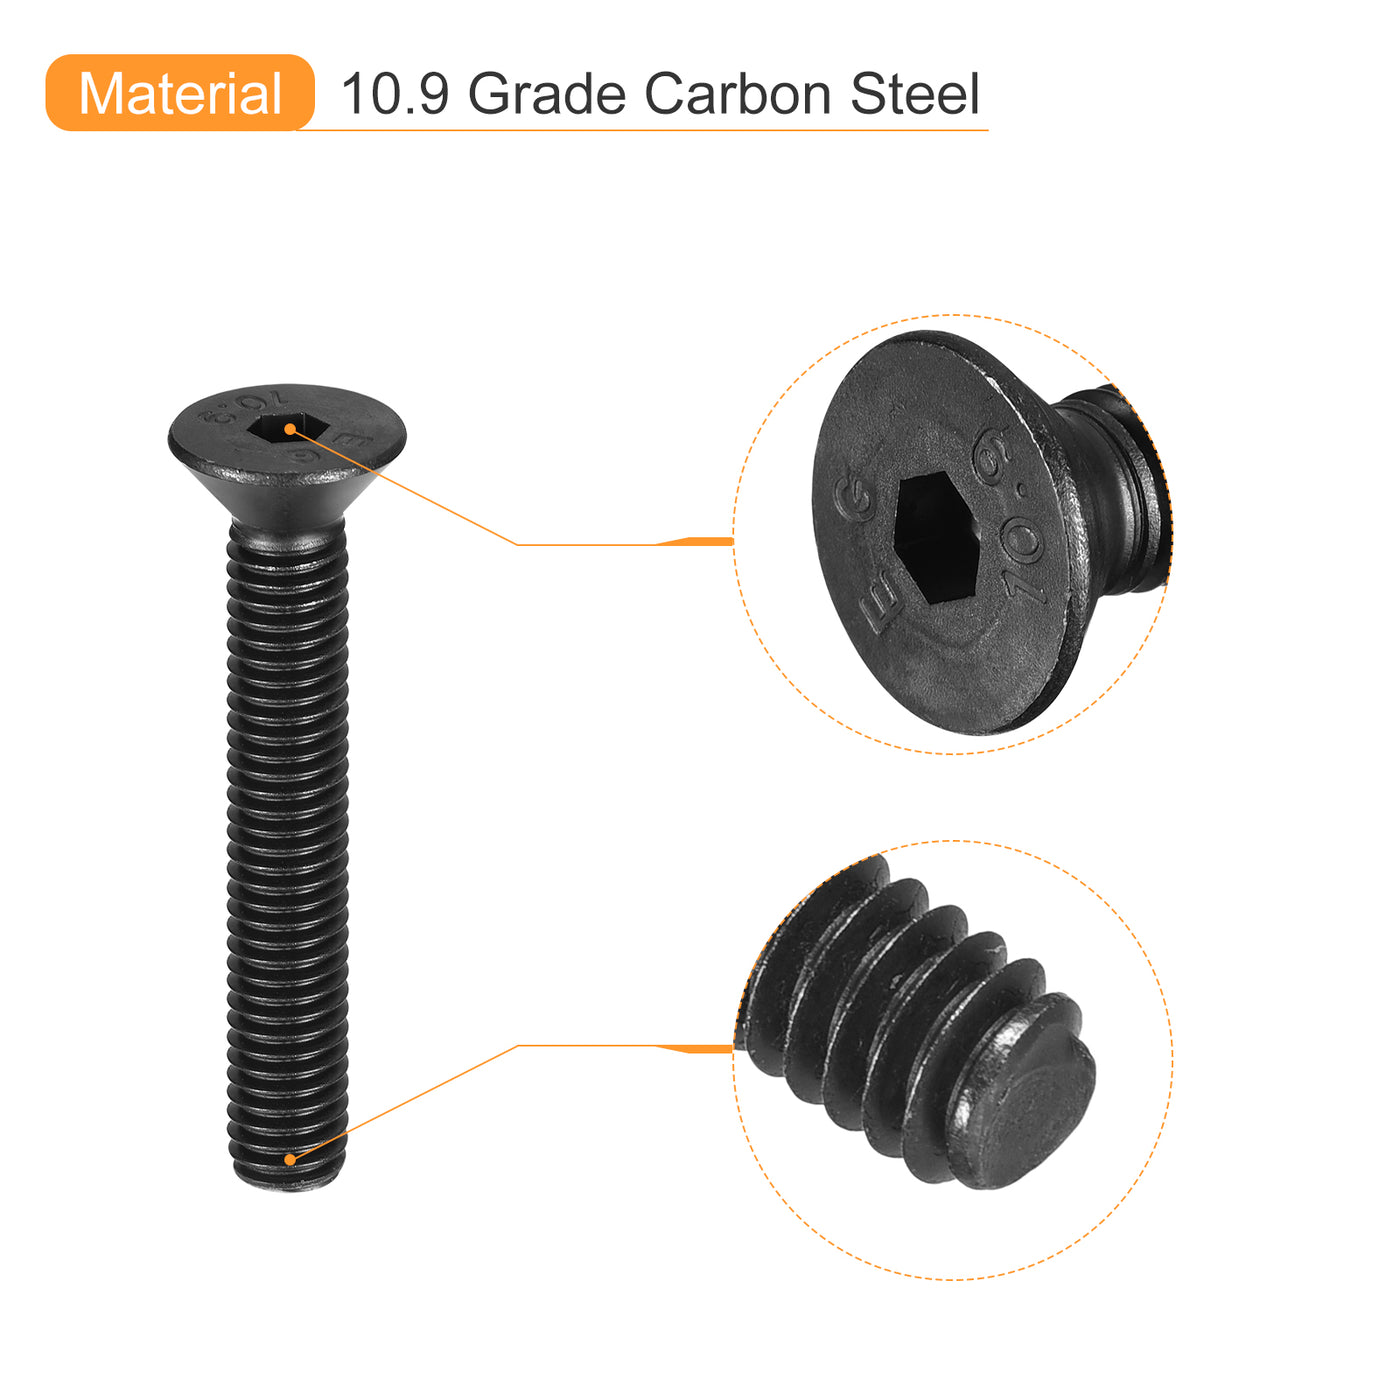 uxcell Uxcell 3/8-16x2-1/2" Flat Head Socket Cap Screws, 10.9 Grade Carbon Steel, 20PCS